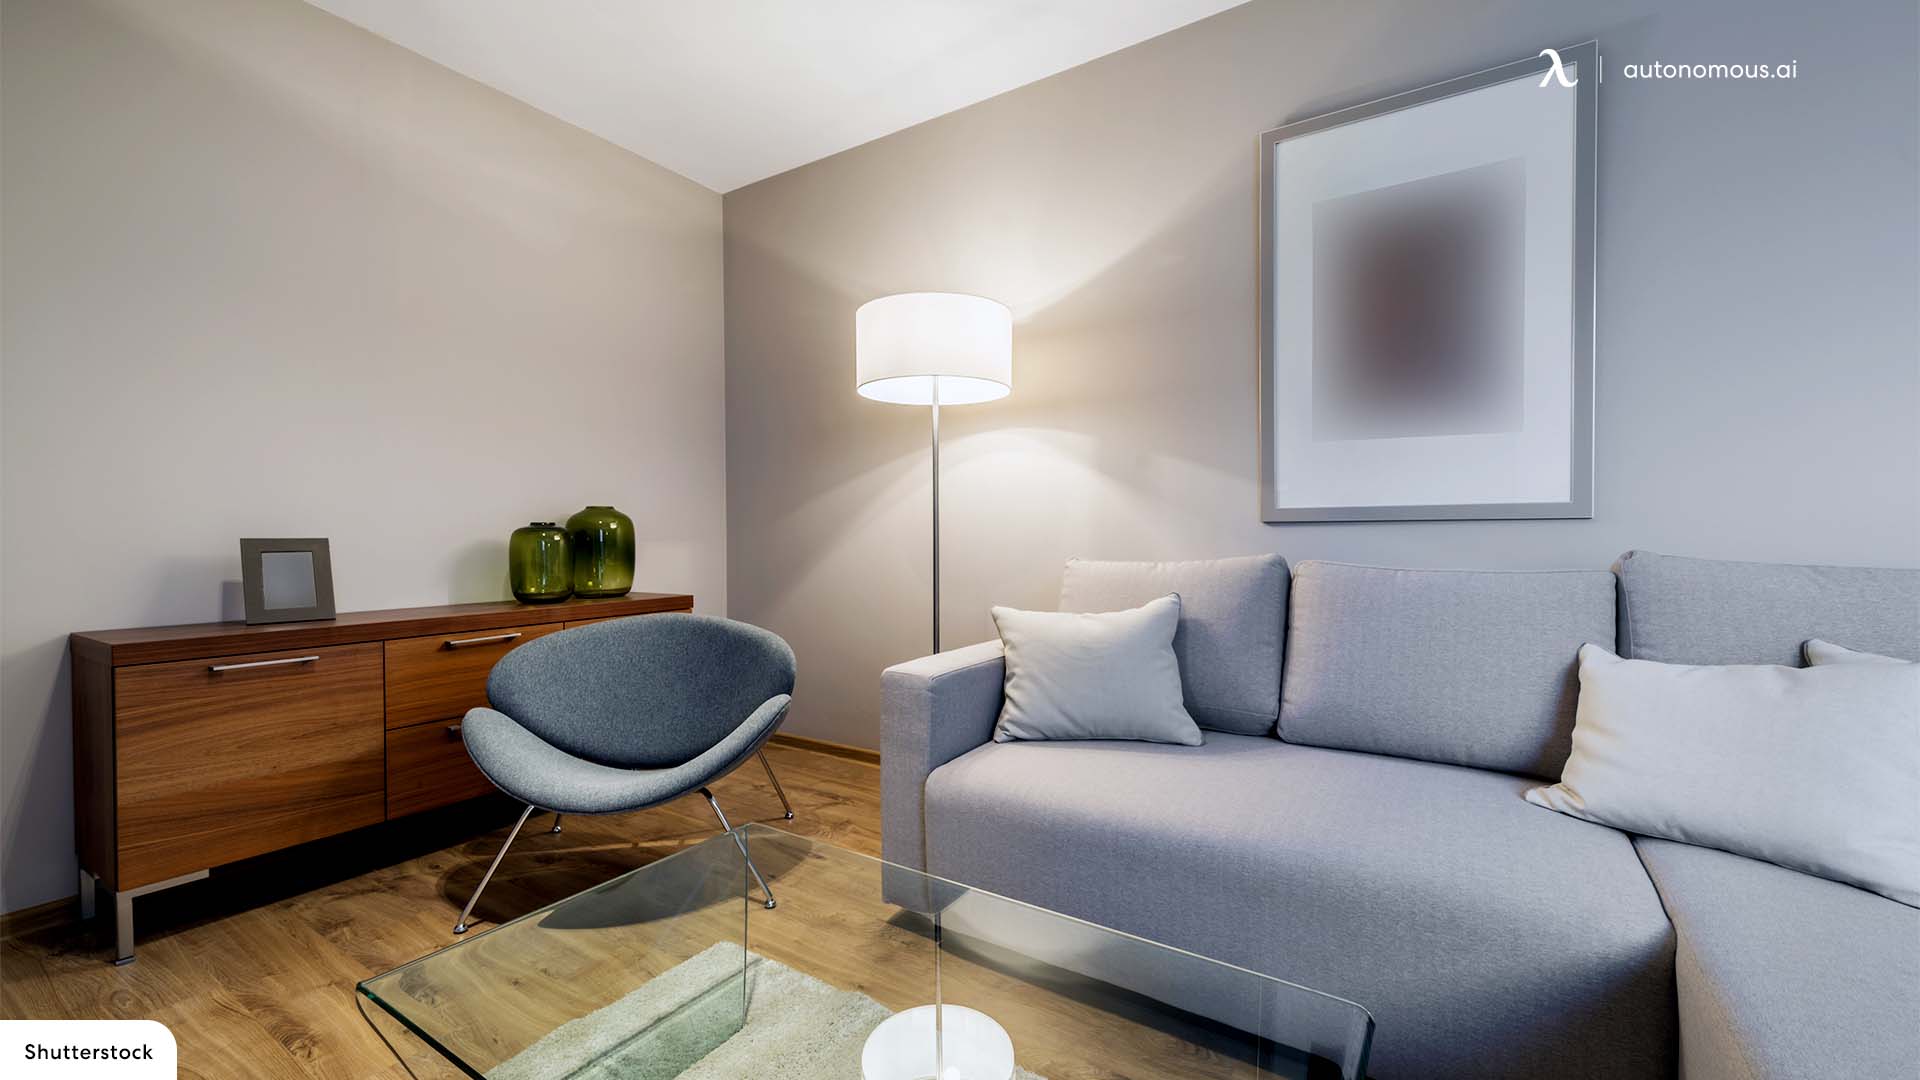 The 10 Best Modern Floor Lamps for Interior Design